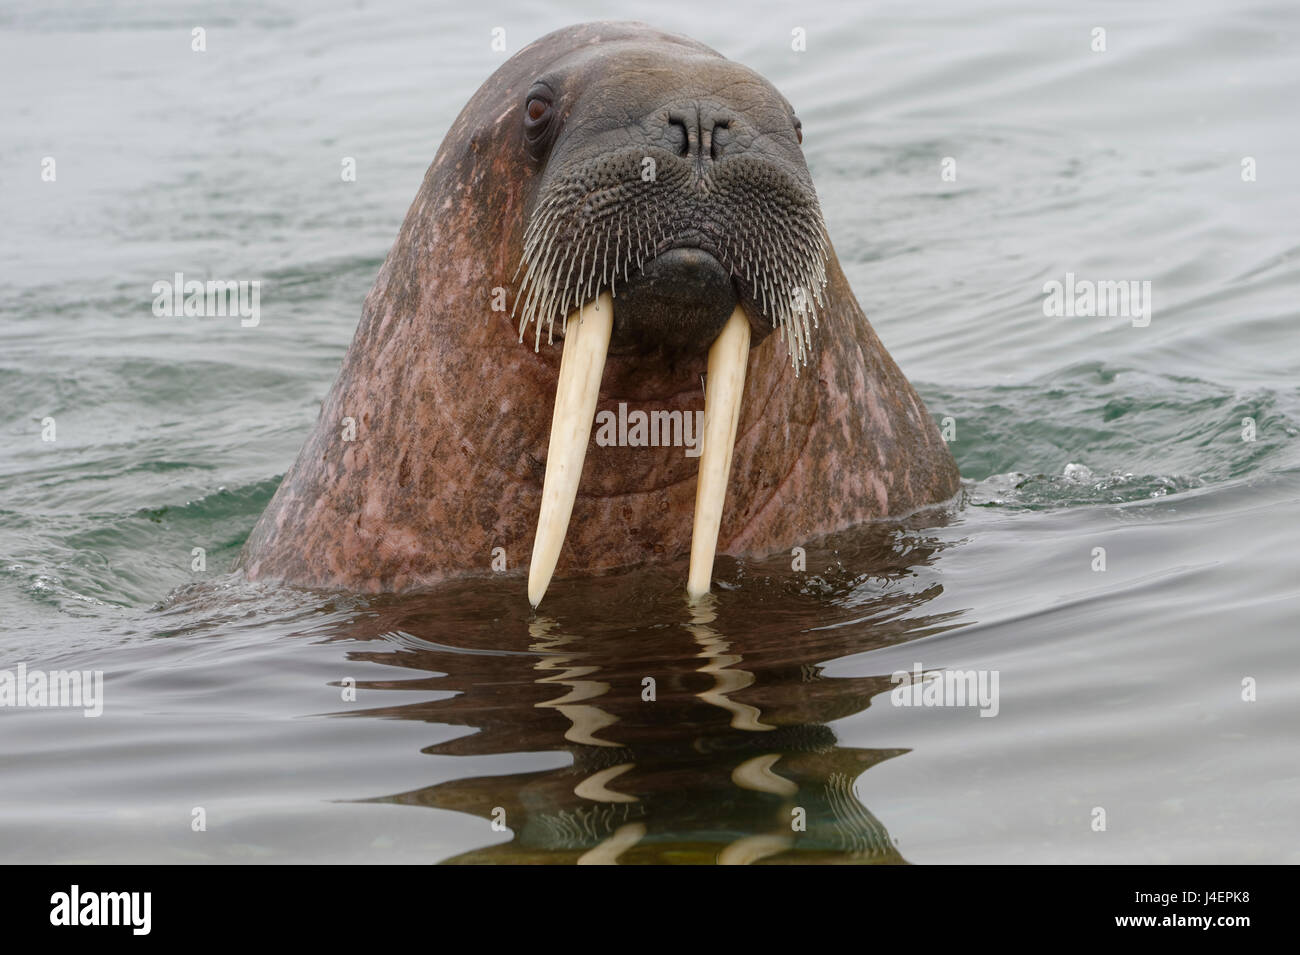 Walrus (Odobenus rosmarus) in water, Spitsbergen Island, Svalbard Archipelago, Arctic, Norway, Scandinavia, Europe Stock Photo